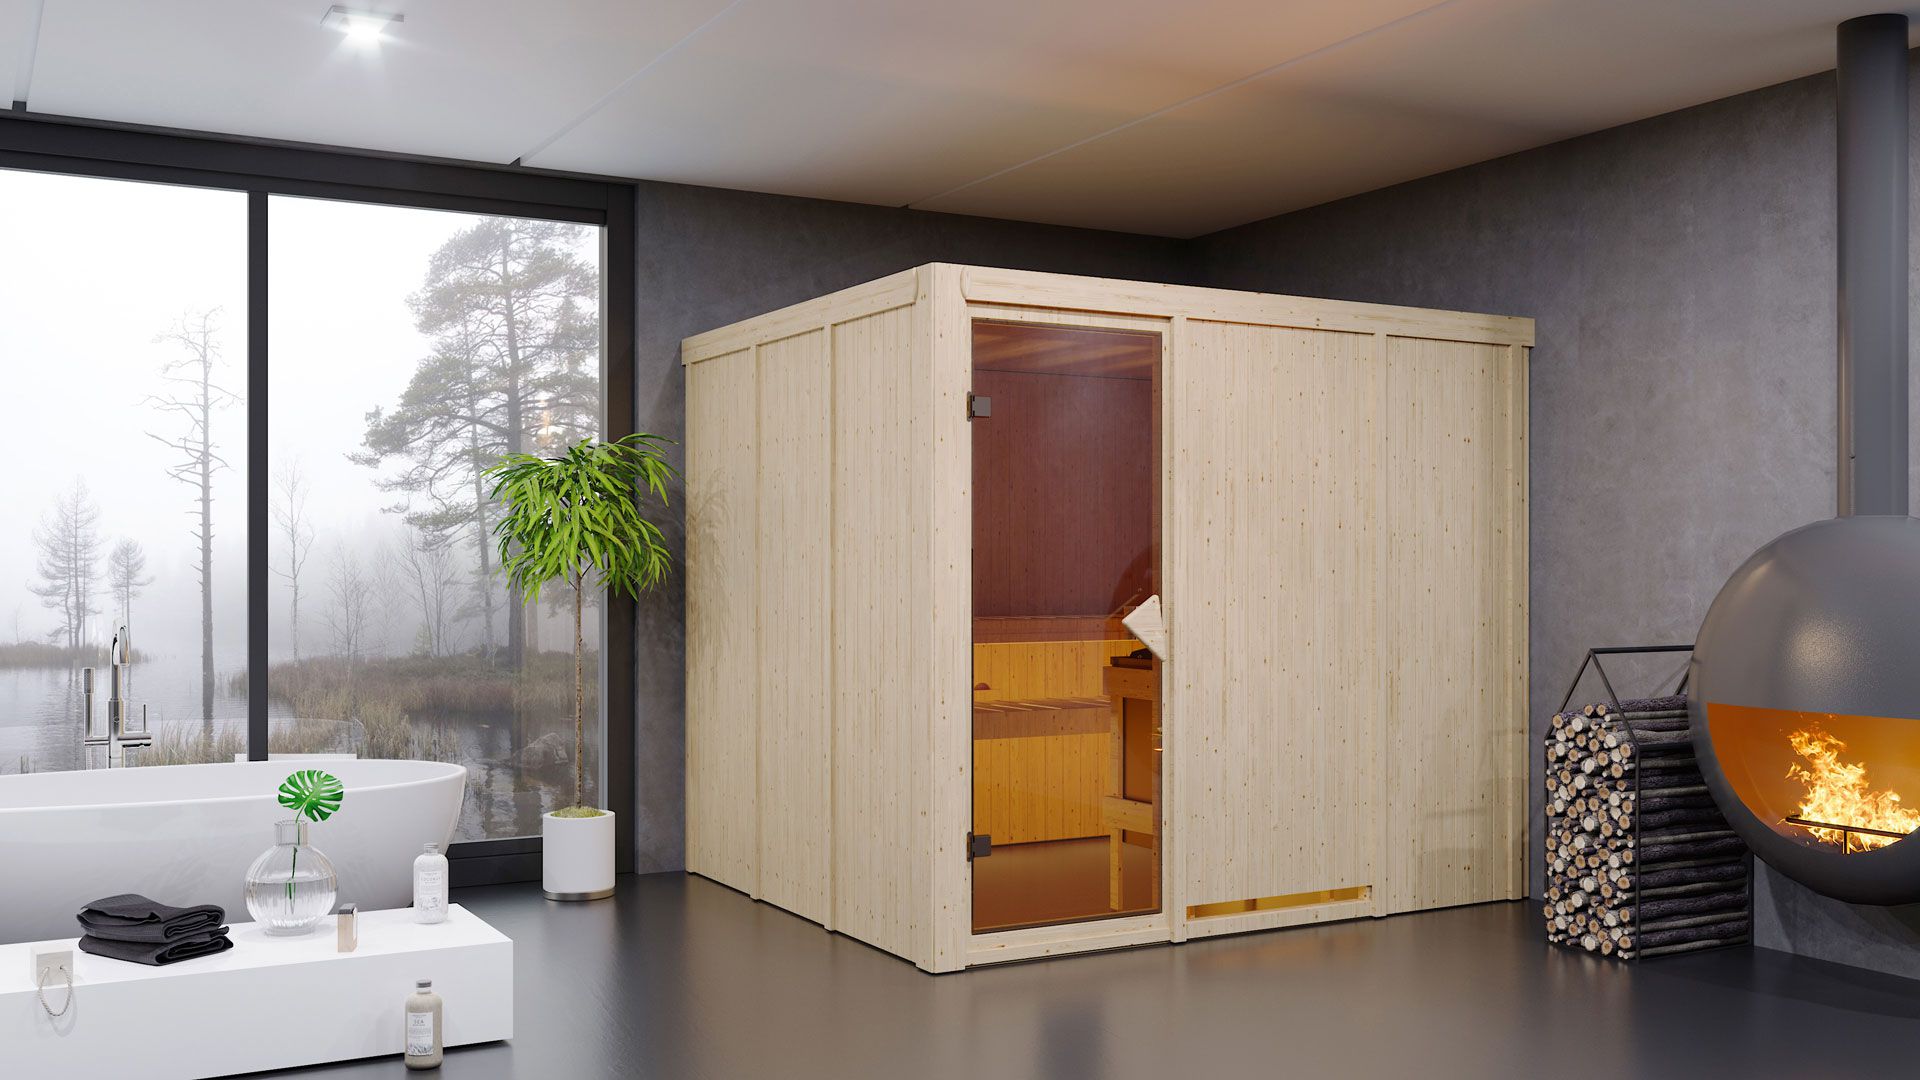 Sauna "Toivo" SET mit Ofen 9 kW Edelstahl - 231 x 196 x 198 cm (B x T x H)